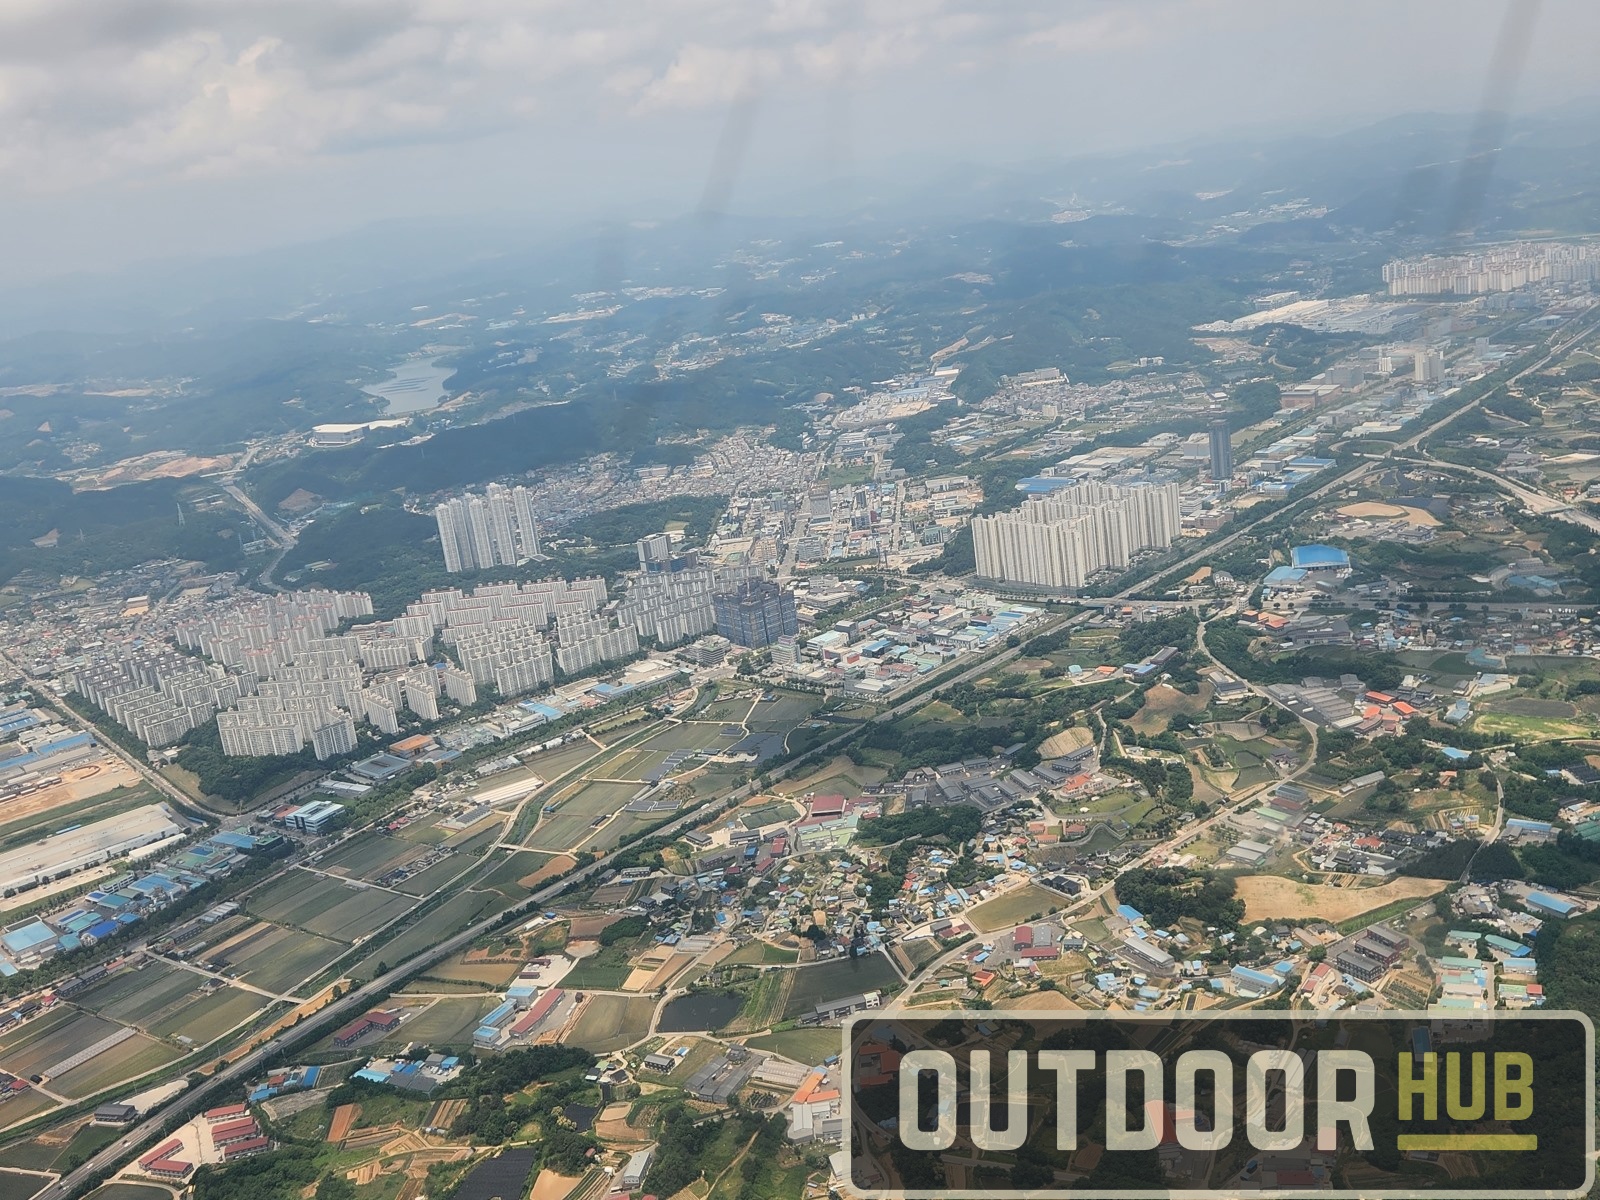 Traveling South Korea - Daejeon Jungang Open Air Market